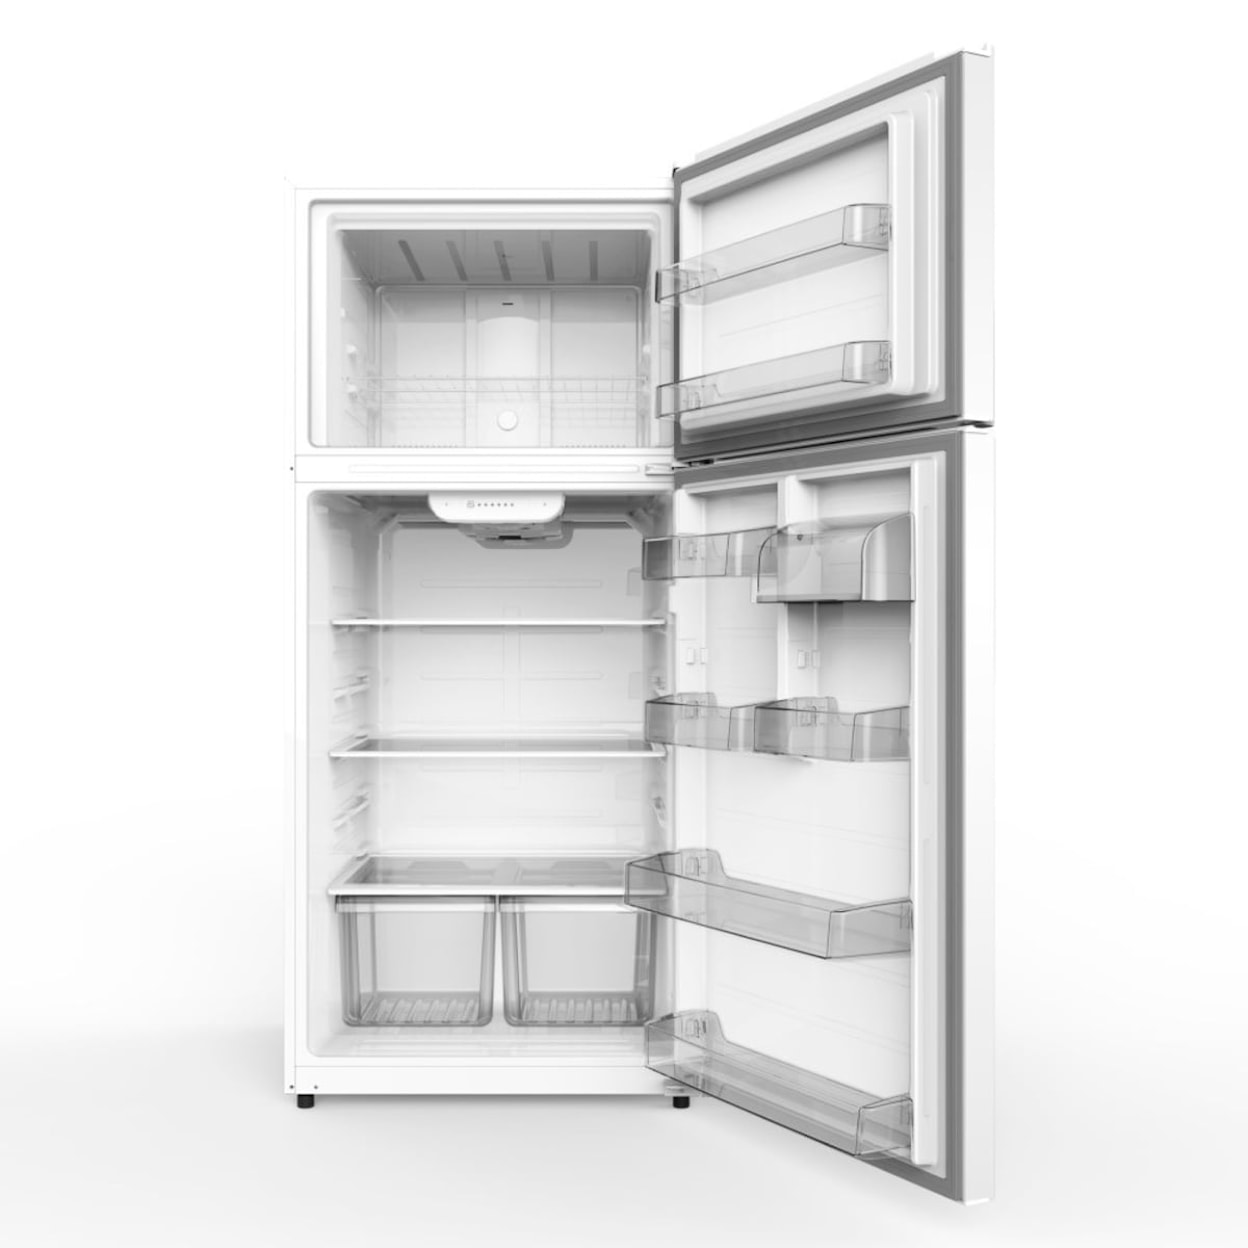 GE Appliances GE Appliances Top-Freezer Refrigerator